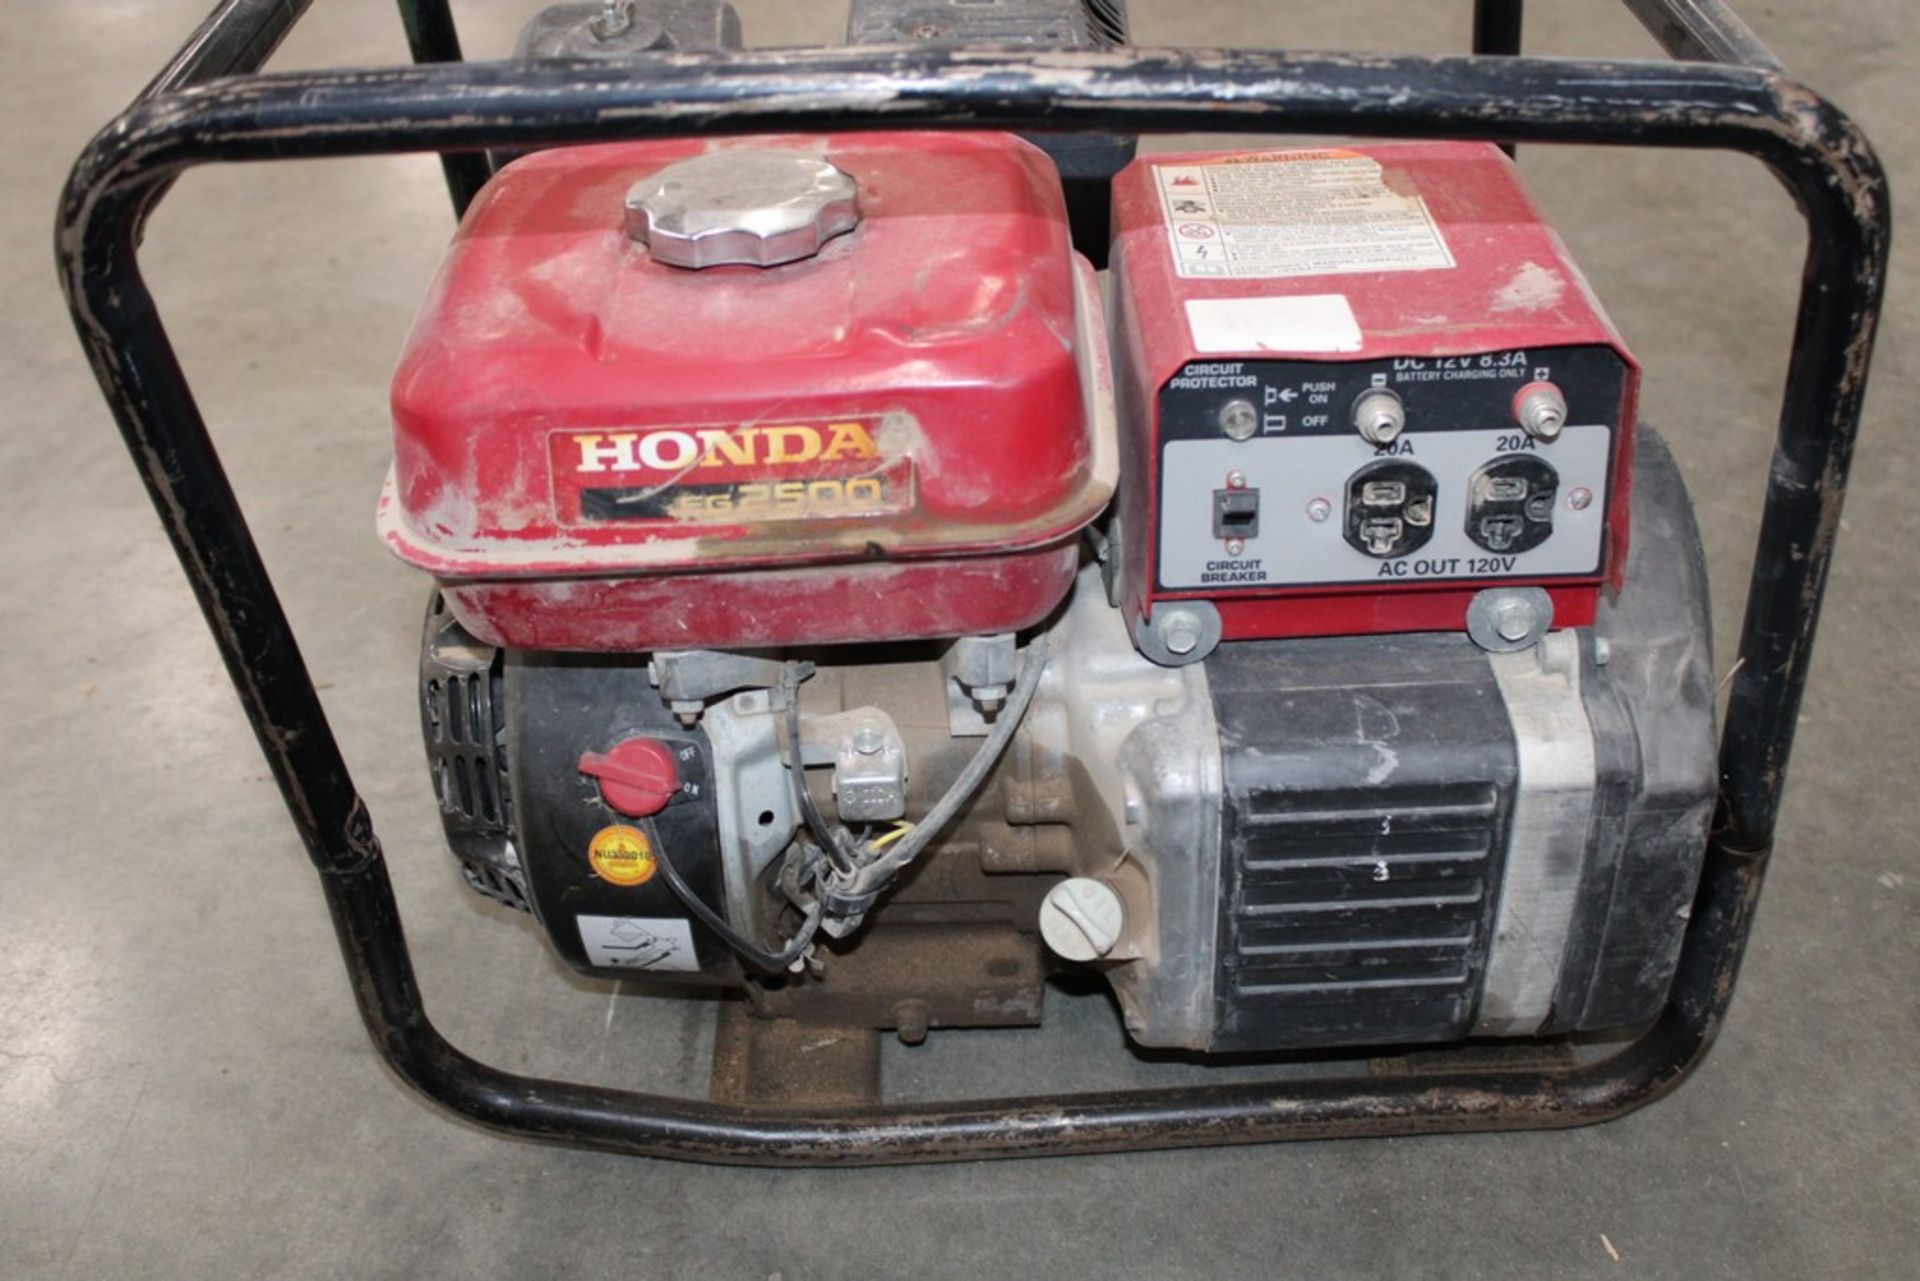 HONDA MODEL EG2500 GAS POWERED GENERATOR - Image 2 of 2